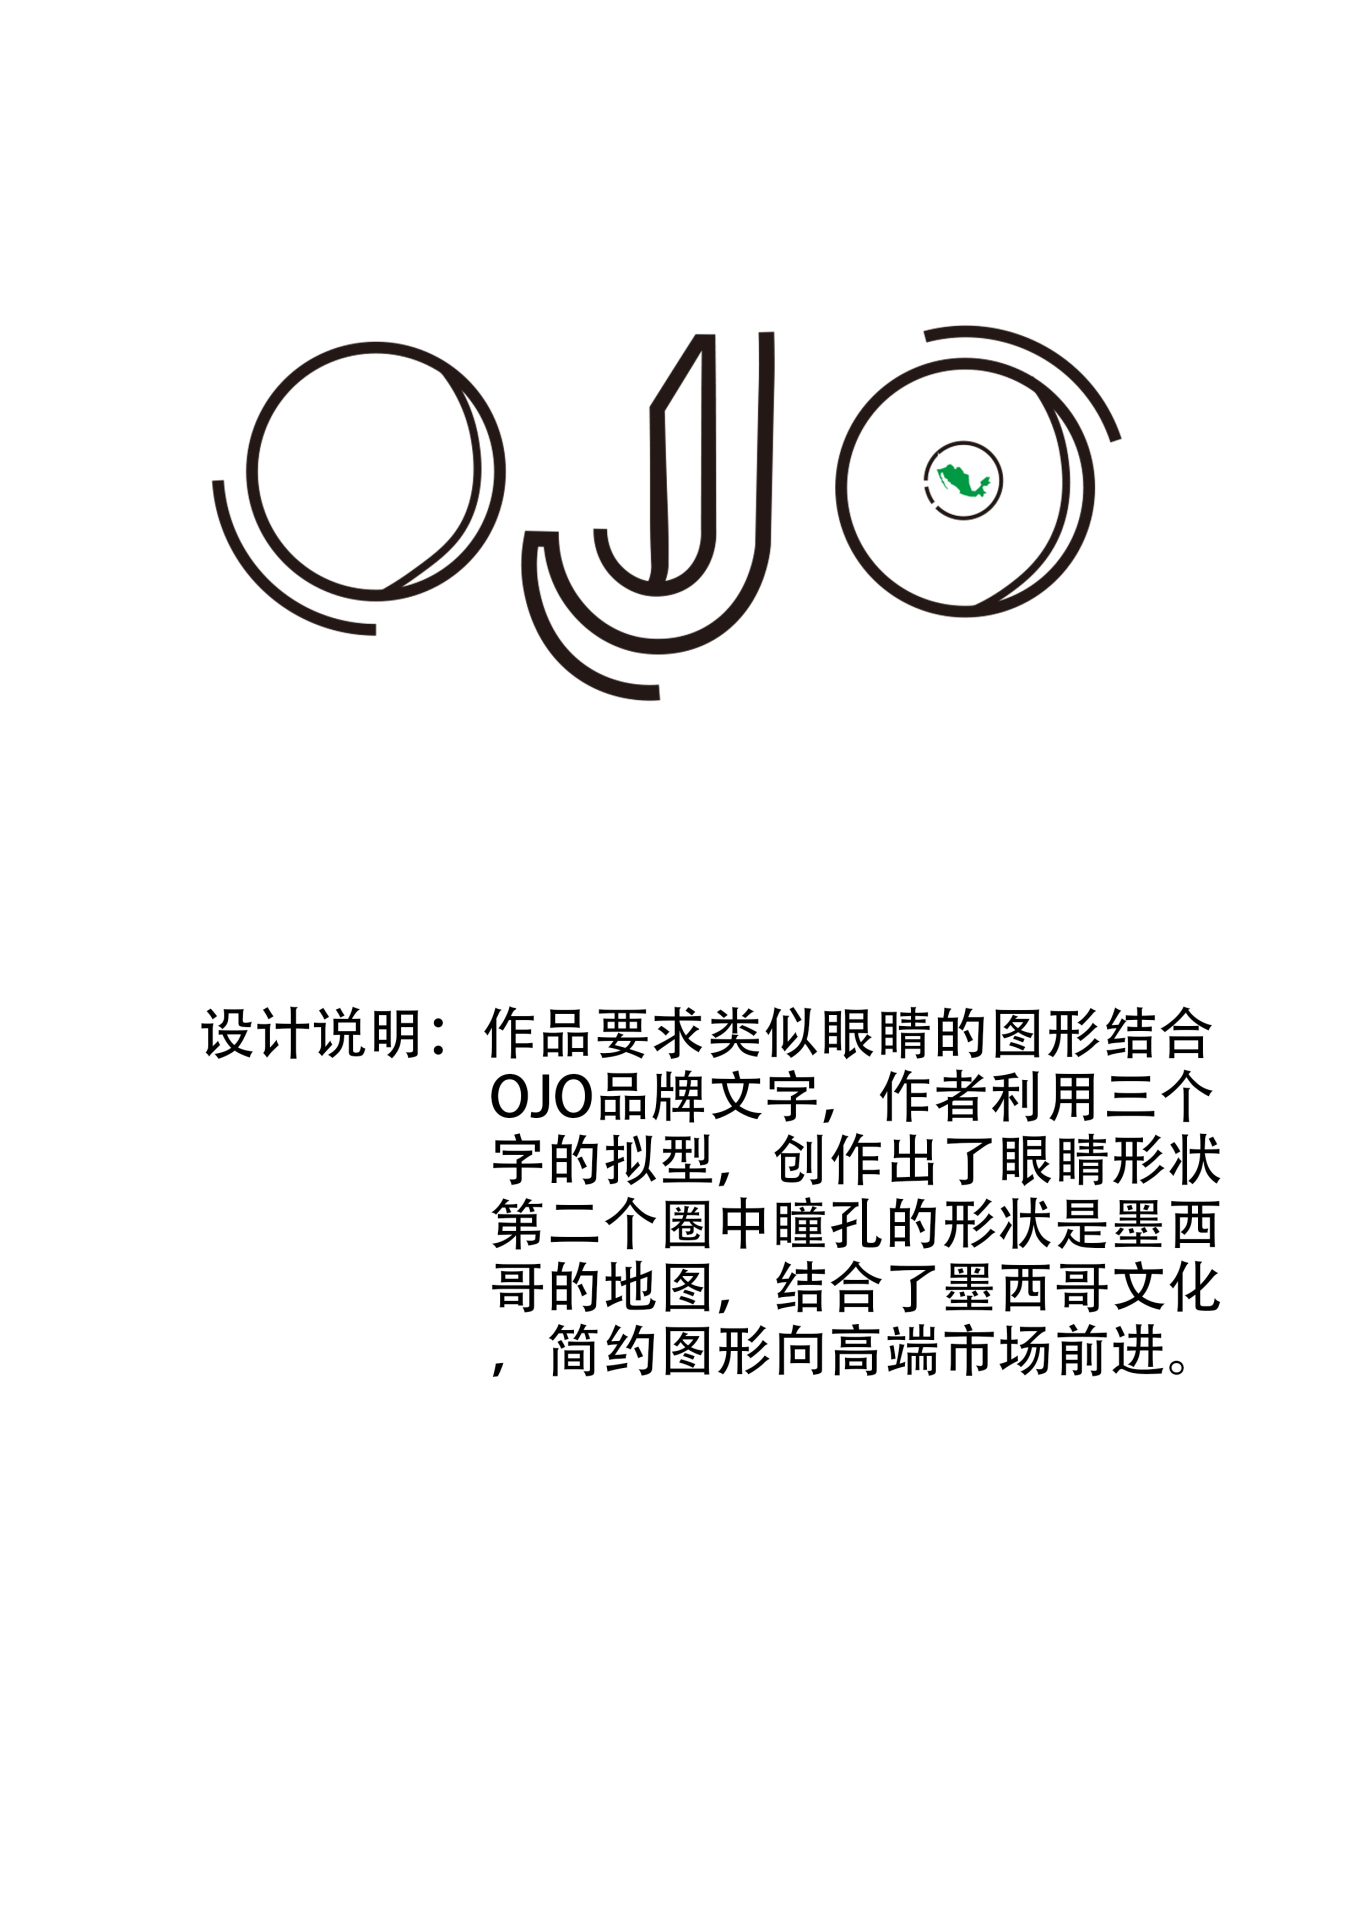 ojo眼镜店logo设计图1